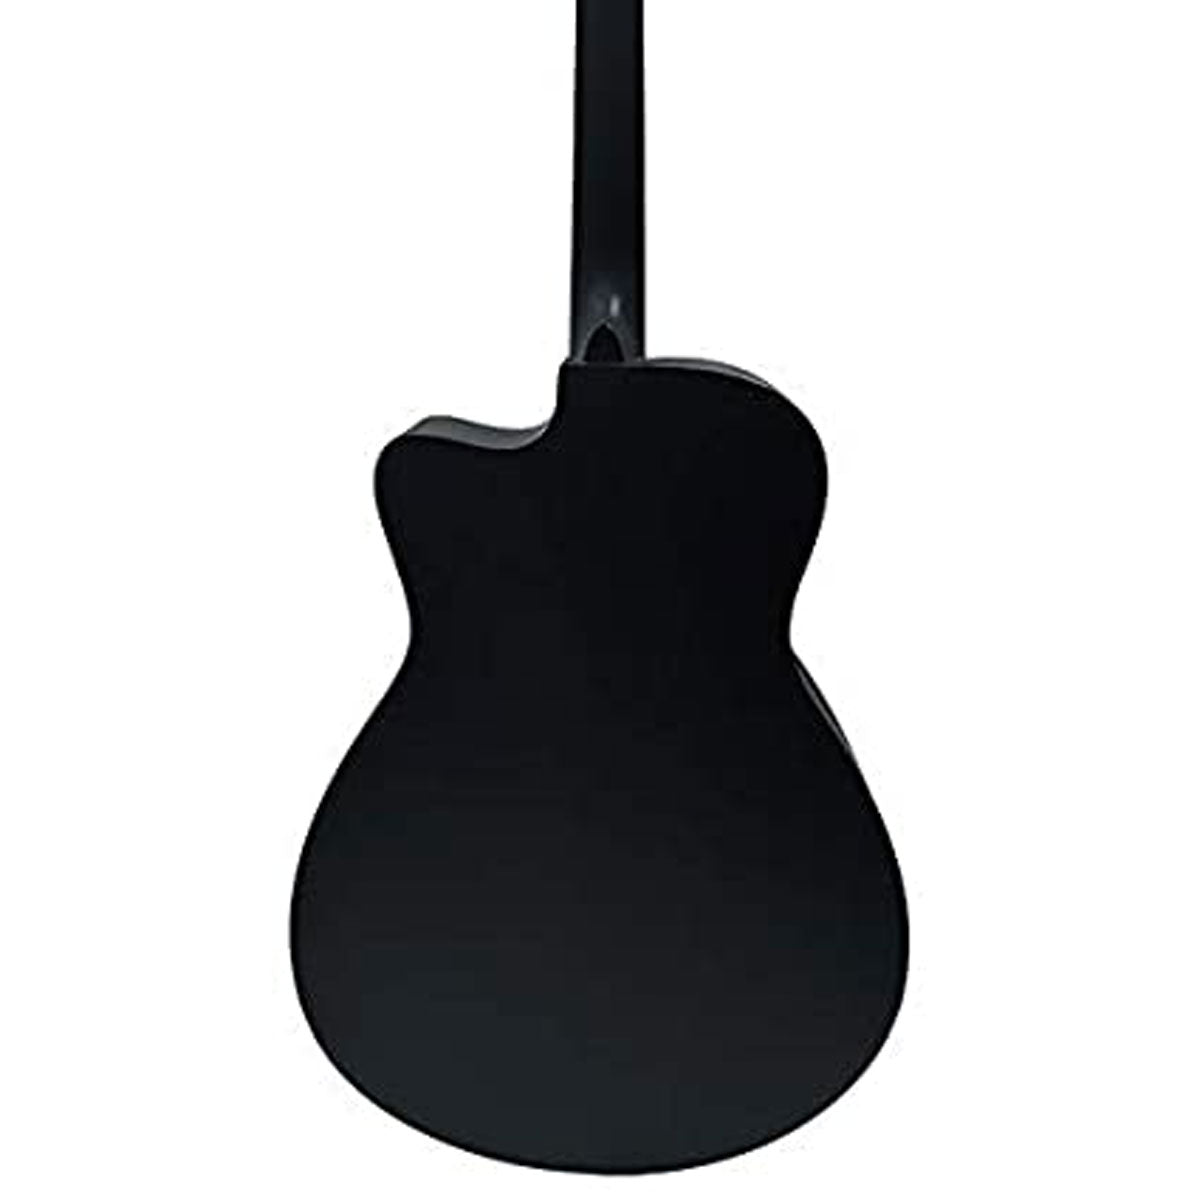 Yamaha FS80C Black Acoustic Guitar